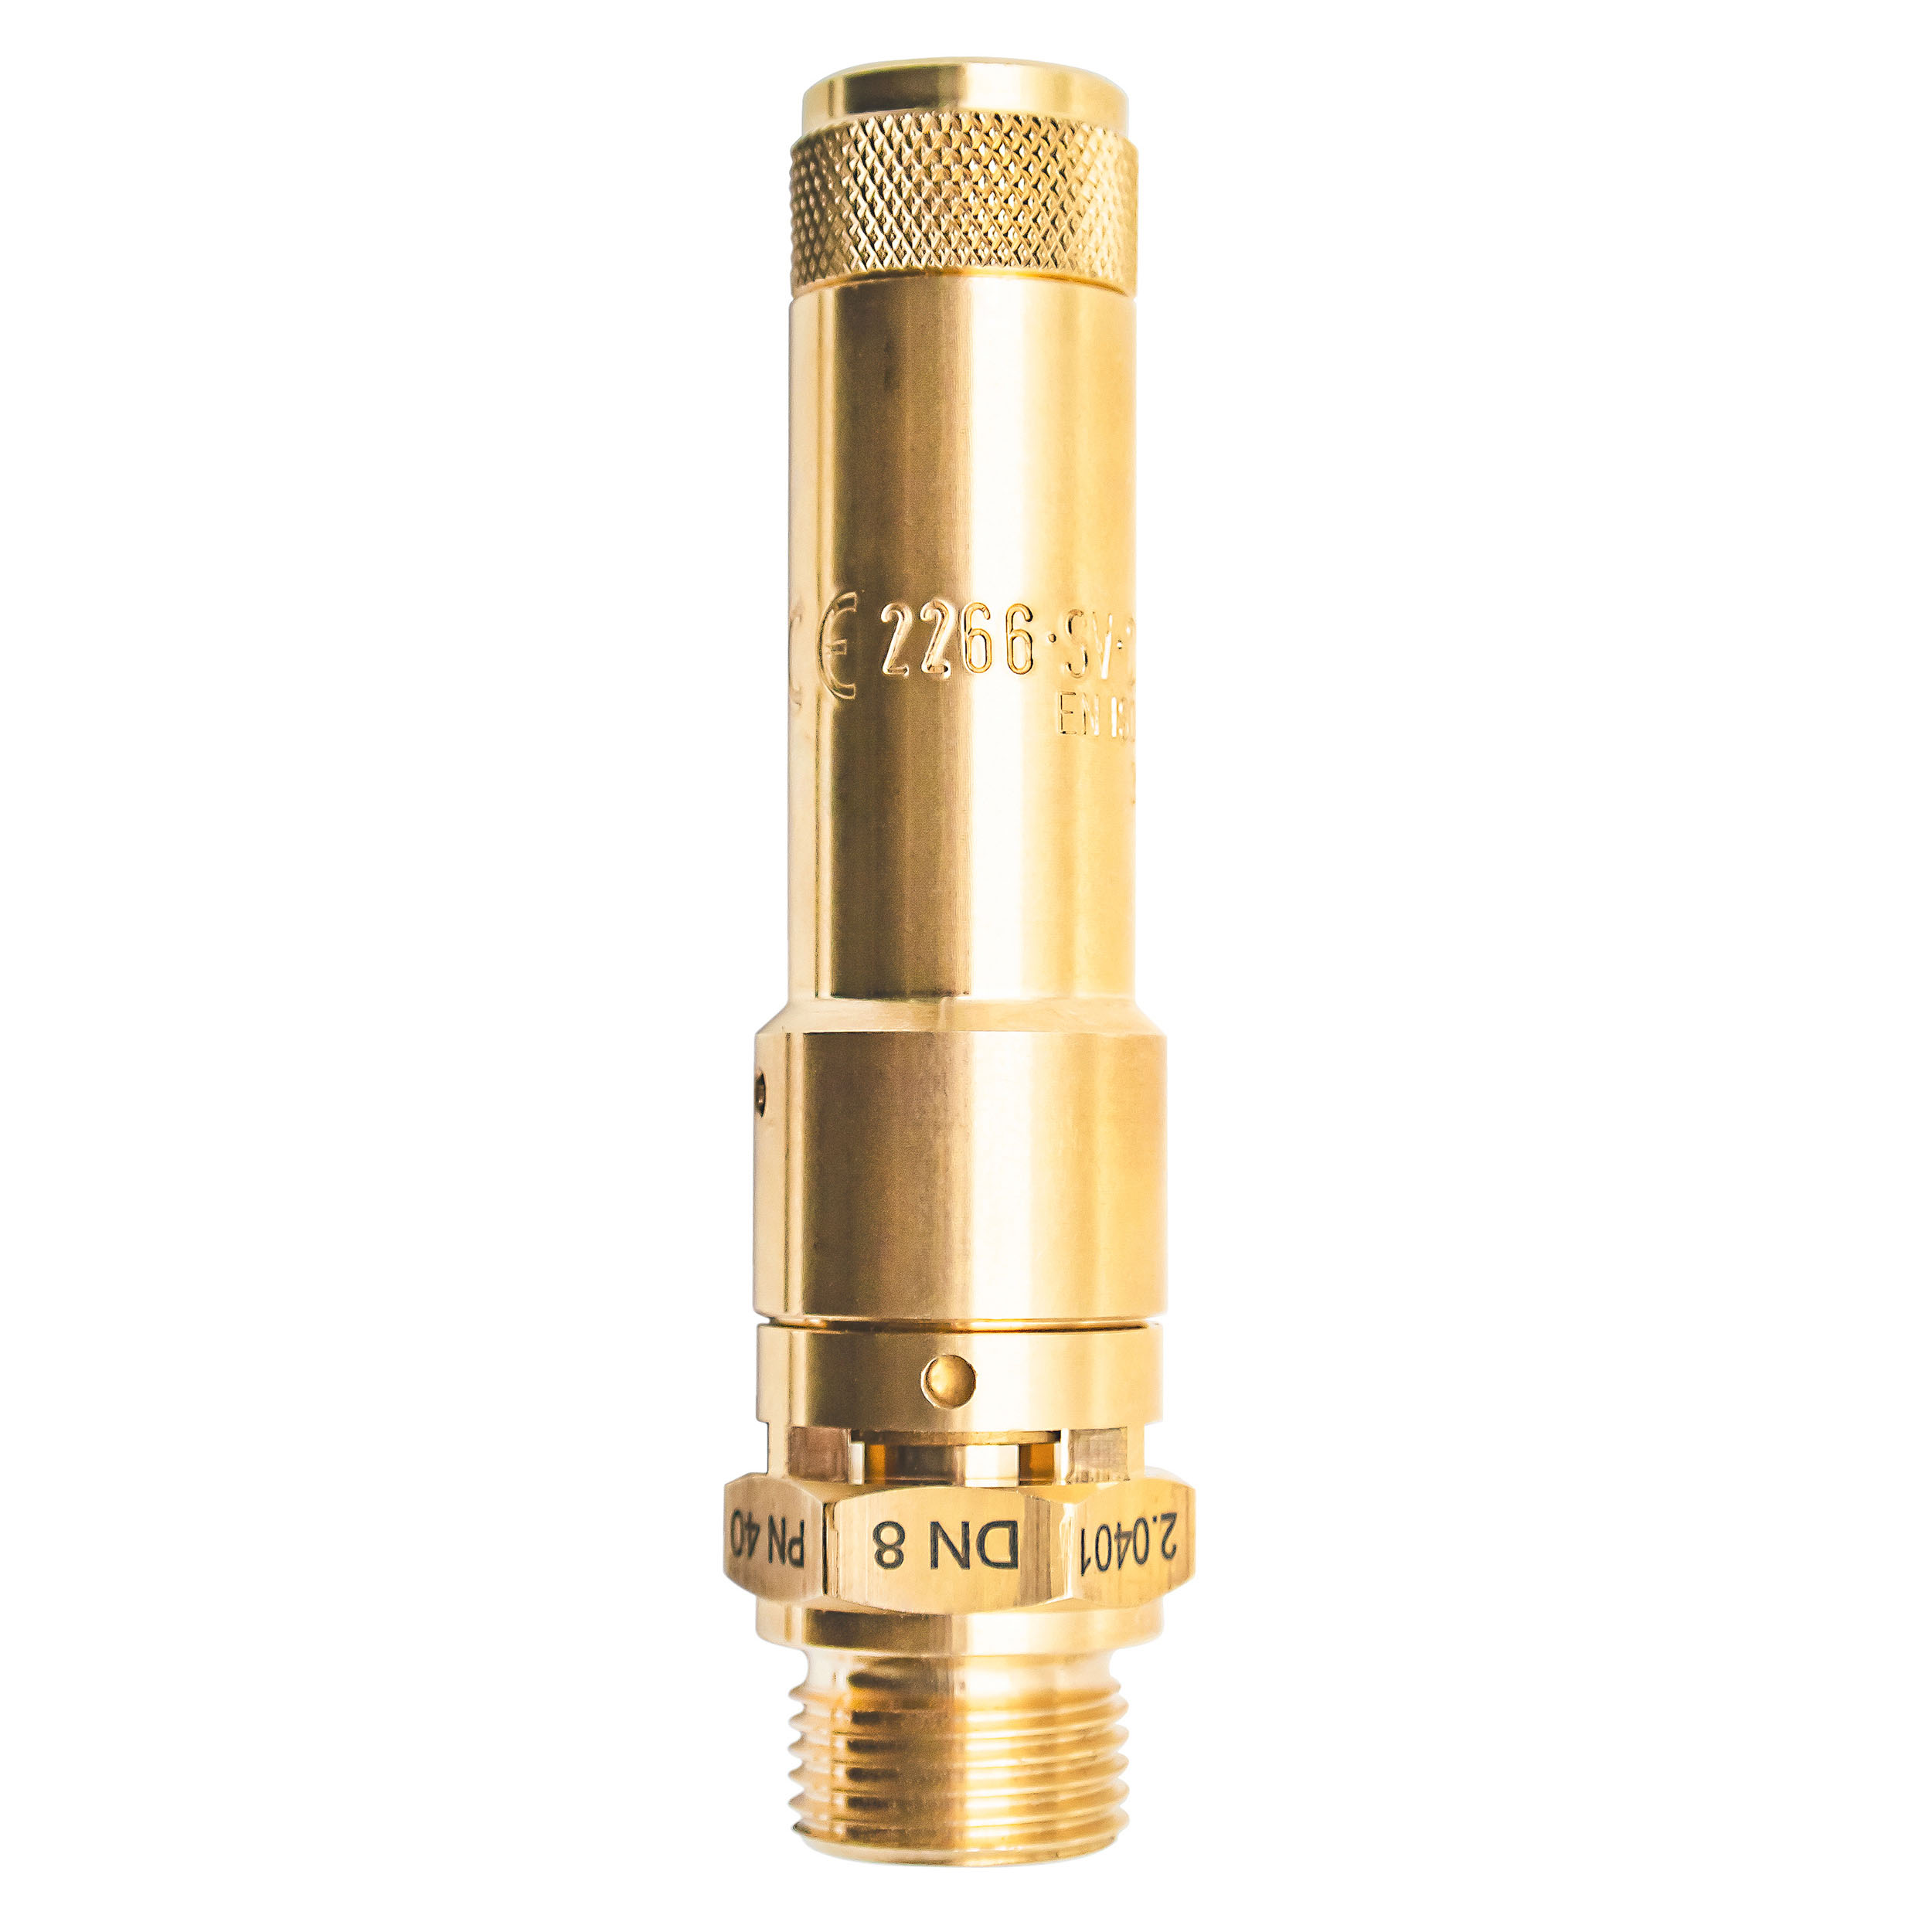 Component-tested safety valve DN 8, G⅜, pressure: 2.1-3 bar